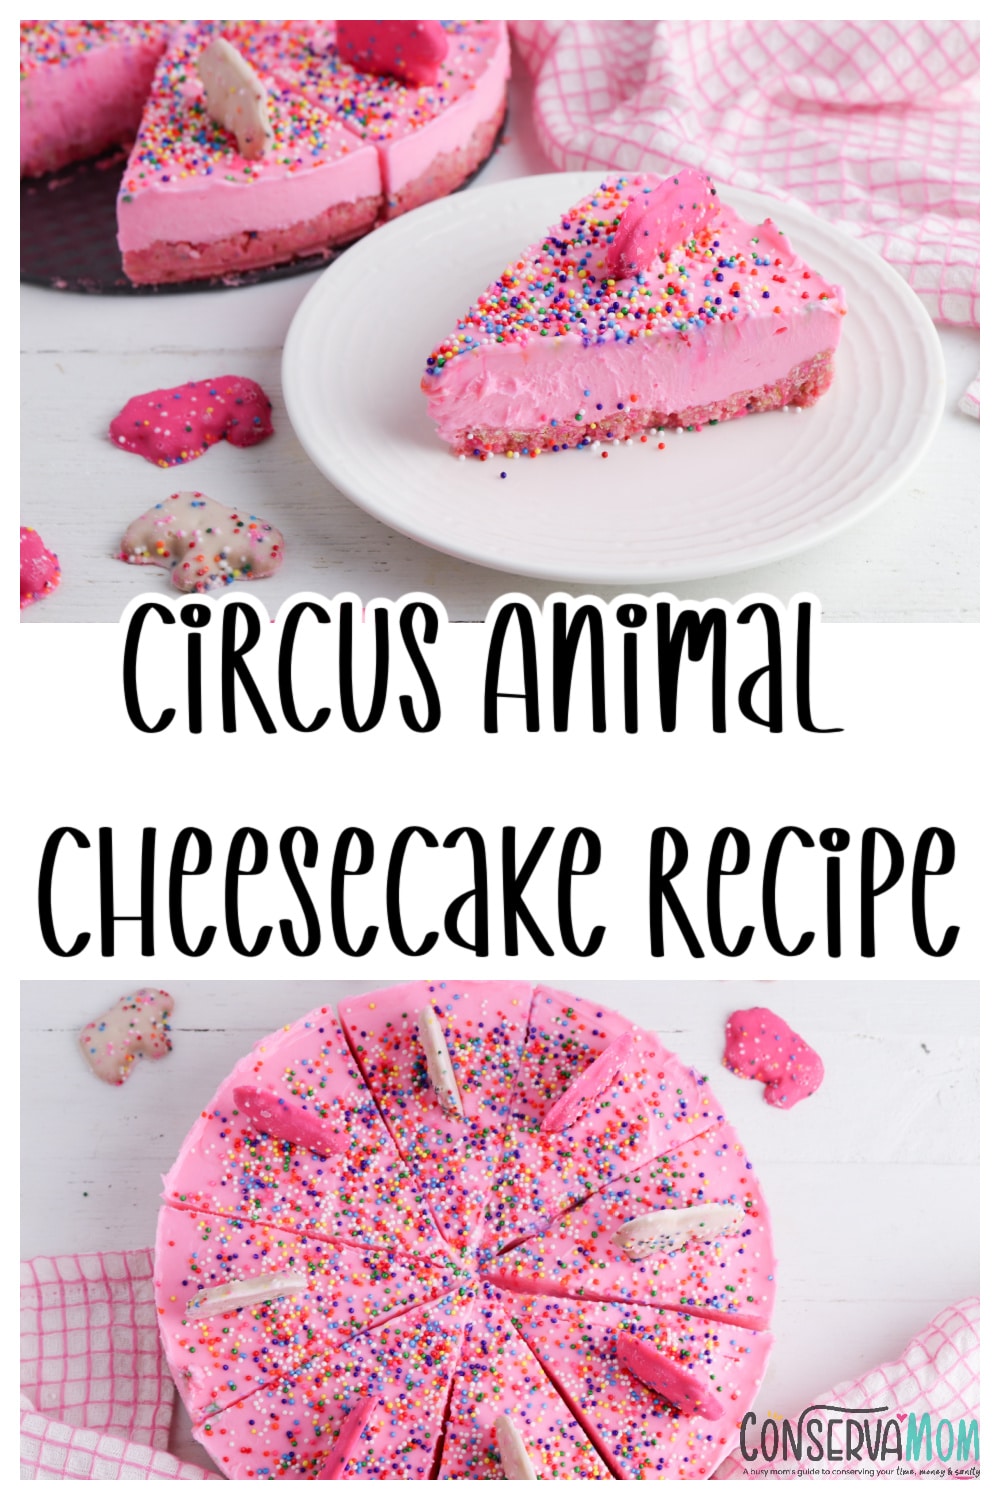 Circus Animal Cheesecake Recipe